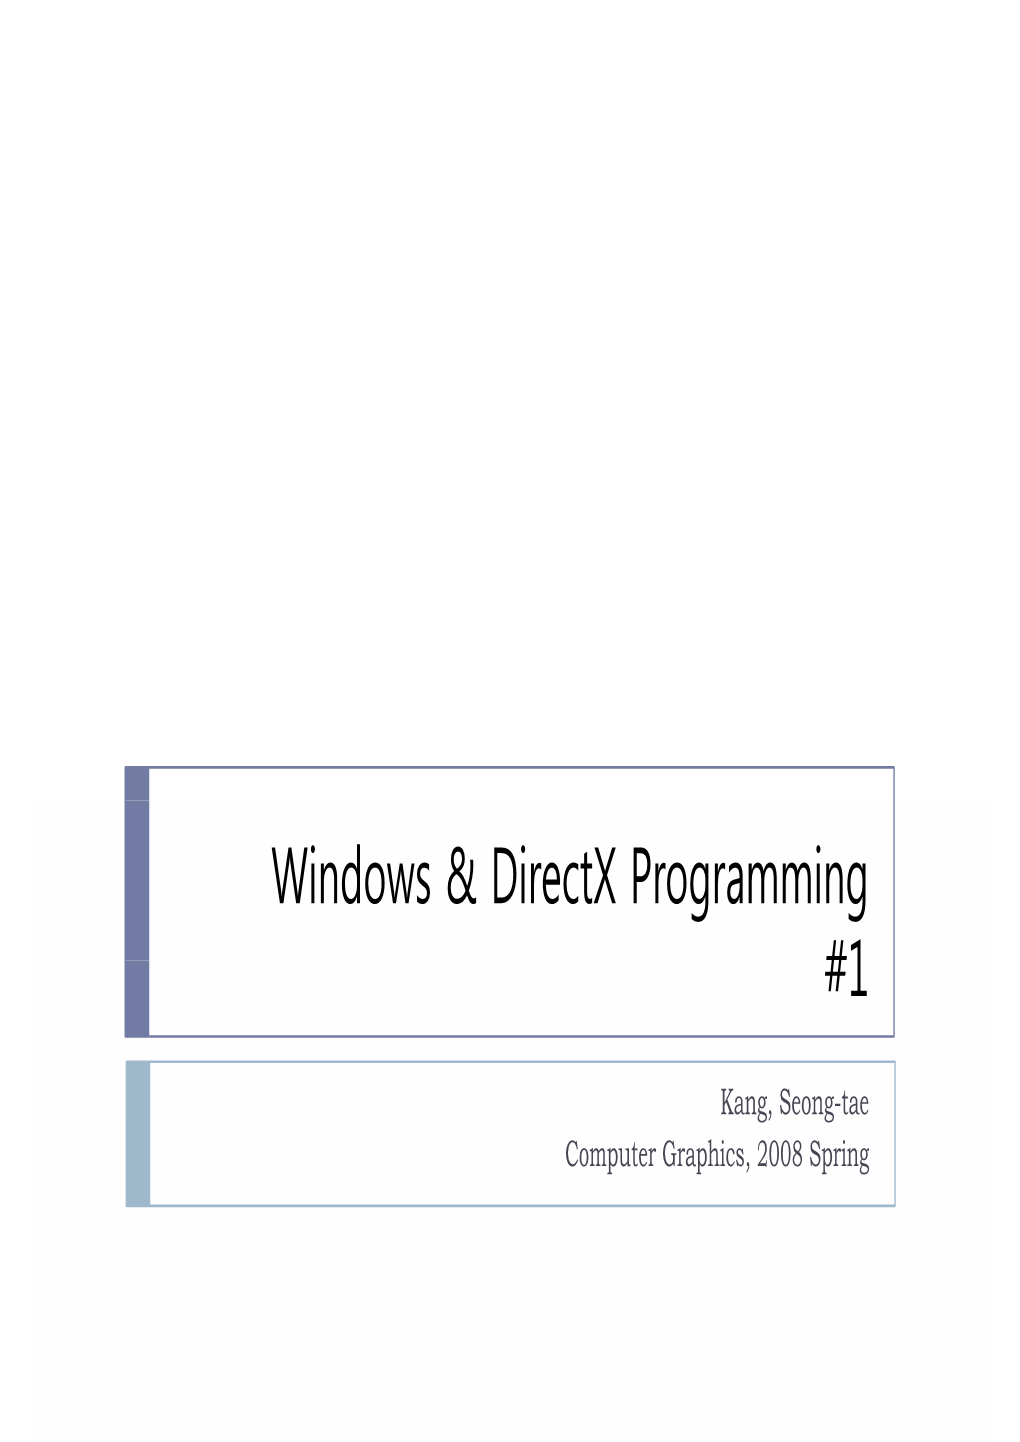 Windows & Directx Programming #1